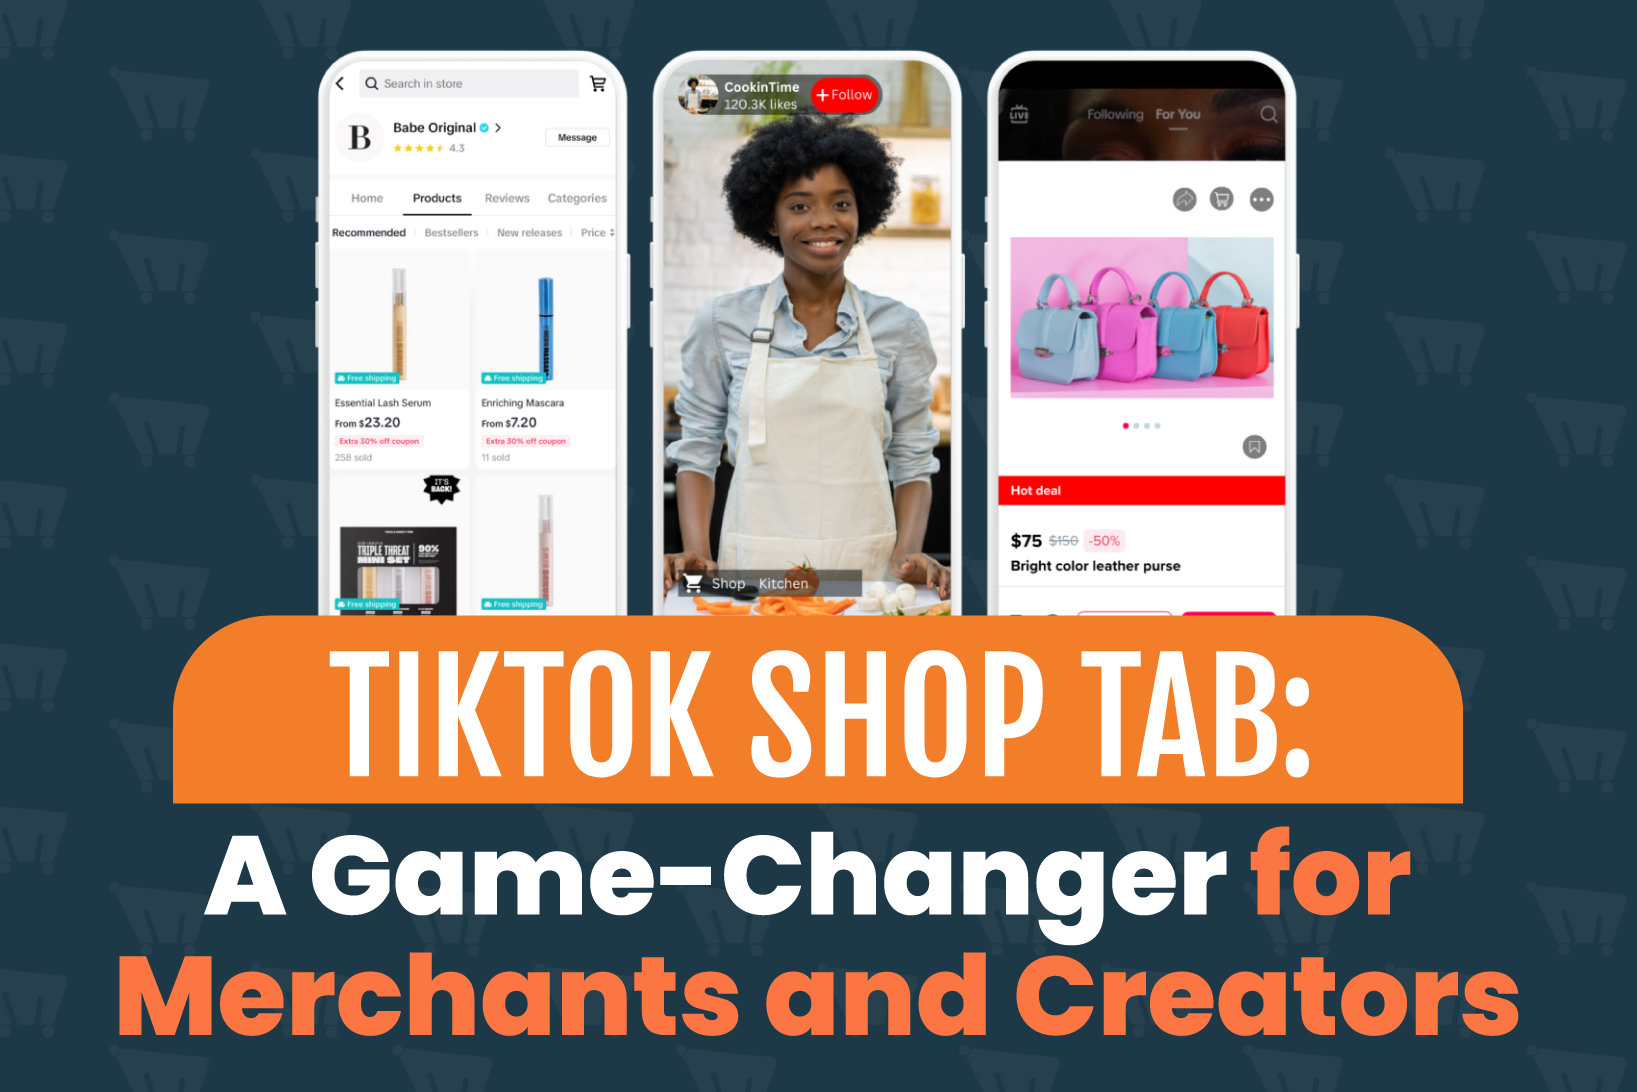 TikTok Shop Tab: A Game-Changer for Merchants and Creators